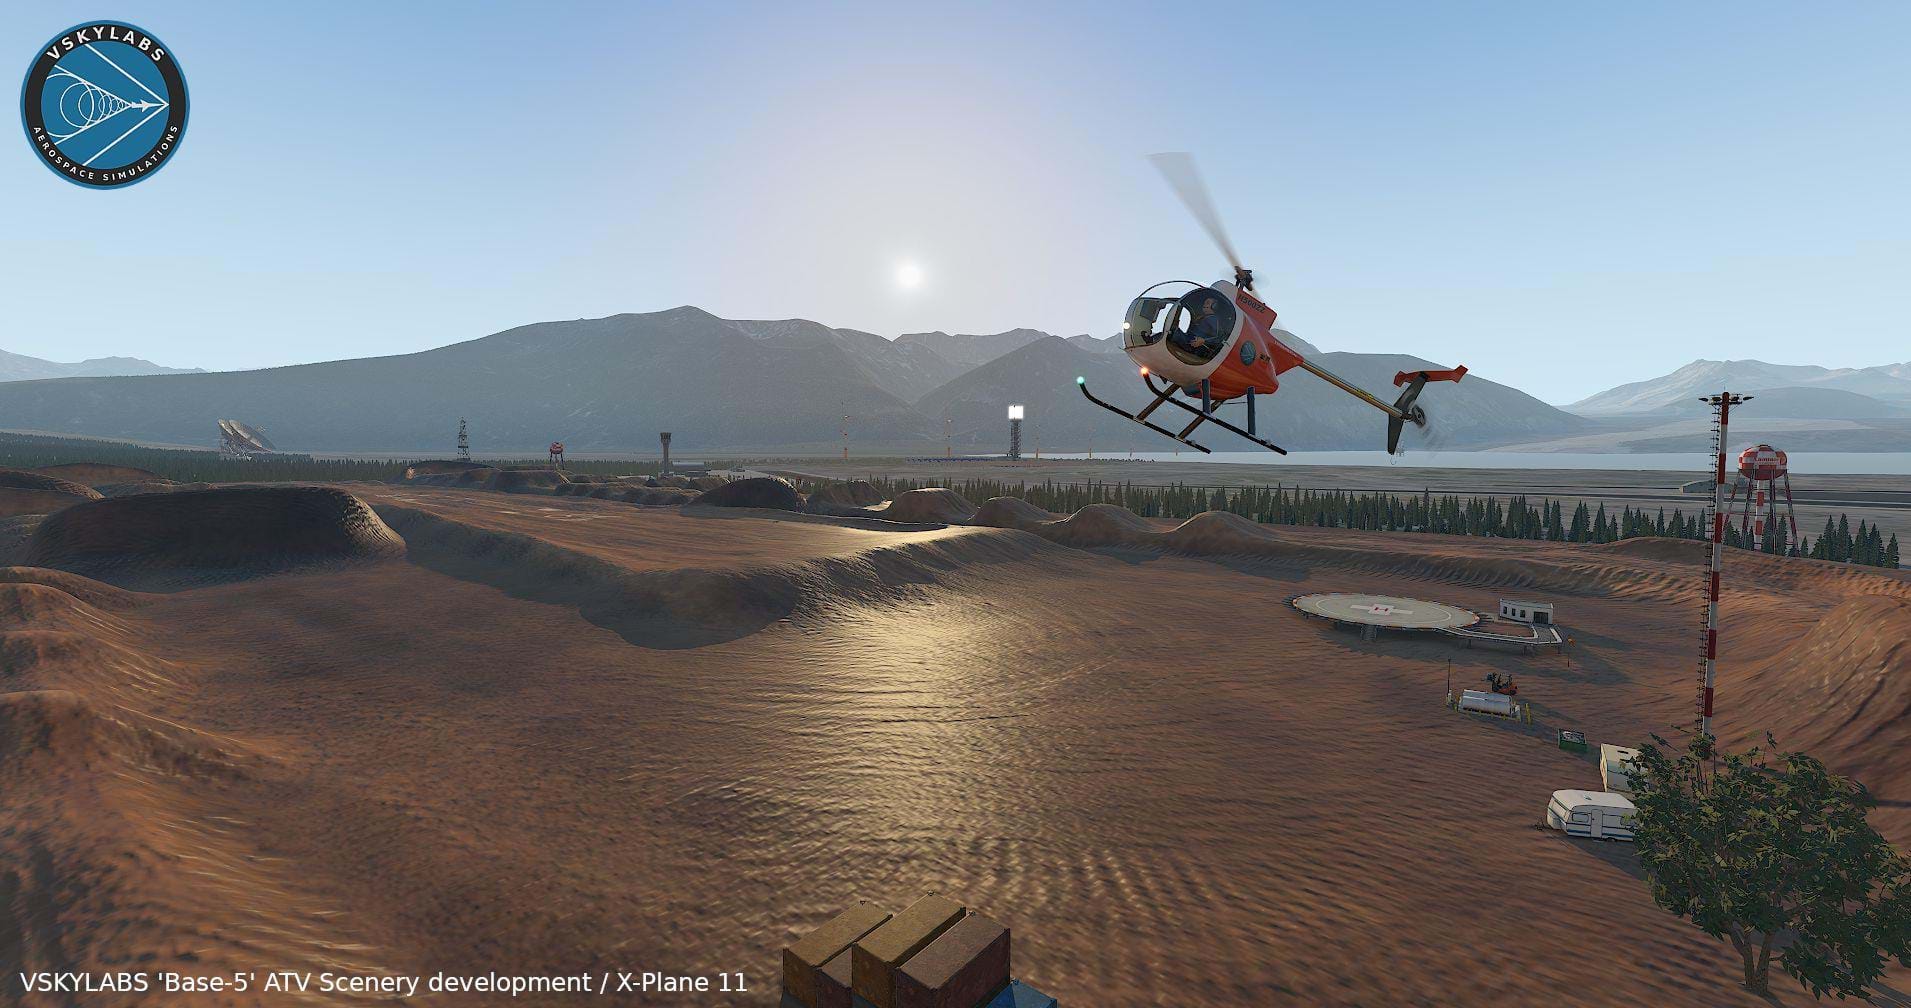 VSKYLABS helicopter training scenery for X-Plane